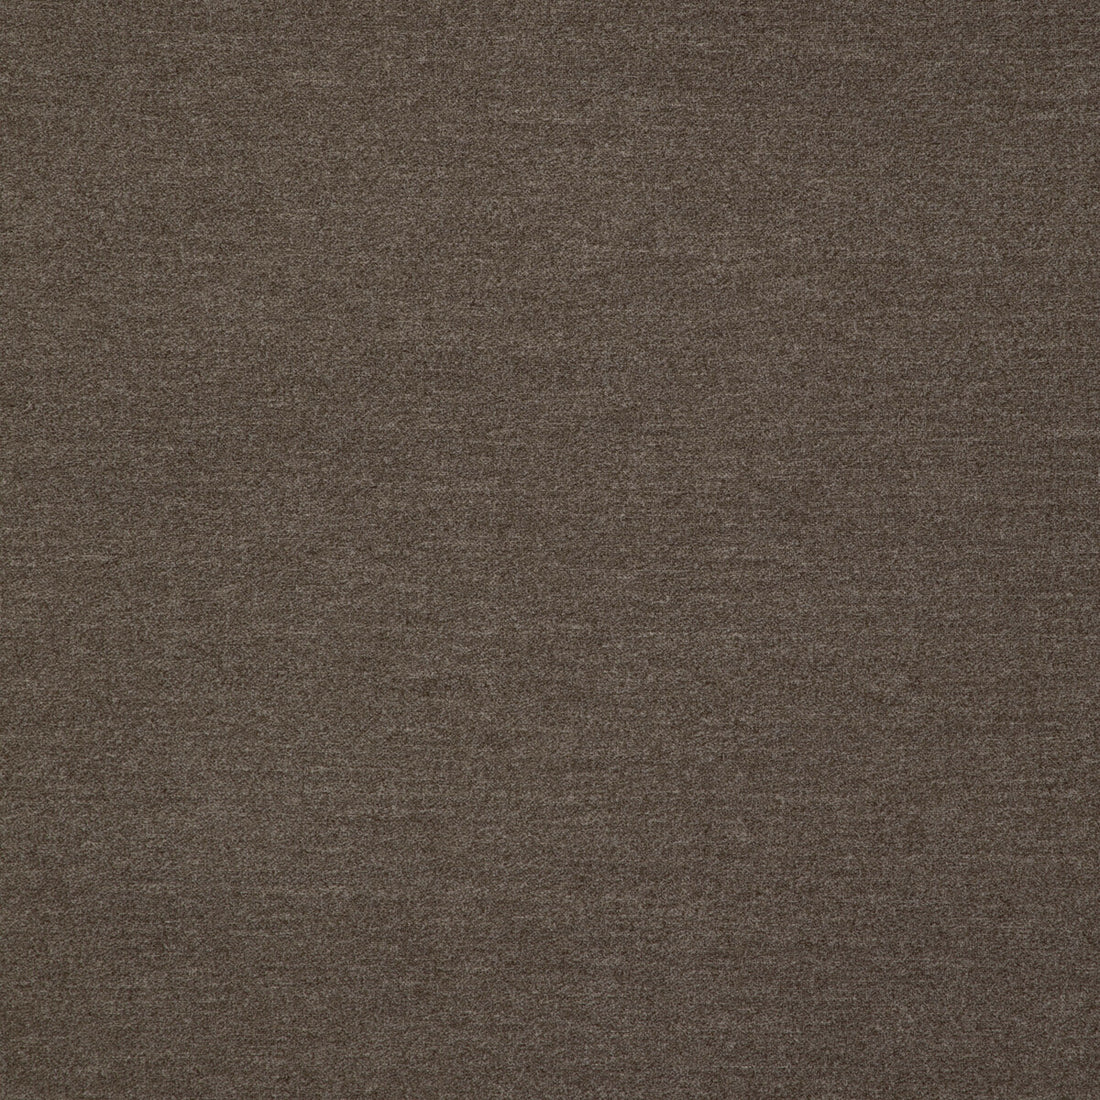 Kravet Smart fabric in 37000-611 color - pattern 37000.611.0 - by Kravet Smart in the Performance Kravetarmor collection